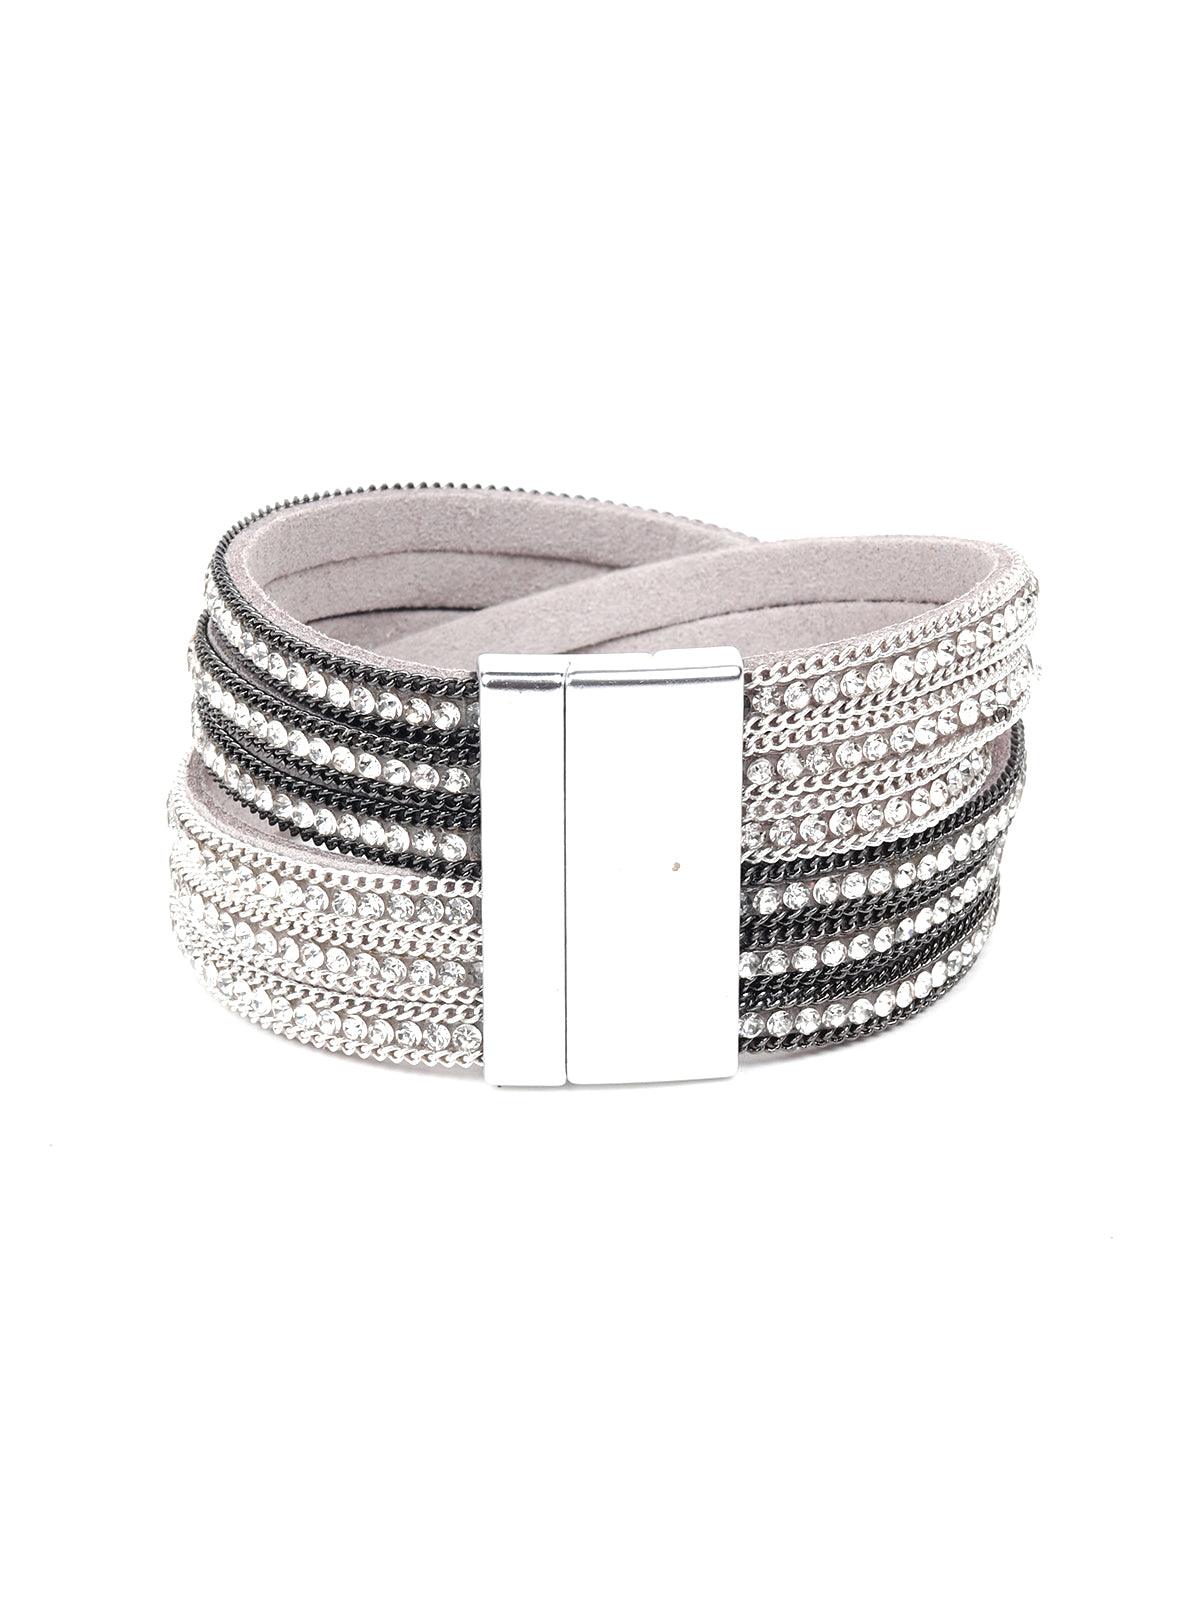 Stunning Silver Twisted Statement Band Bracelet - Odette